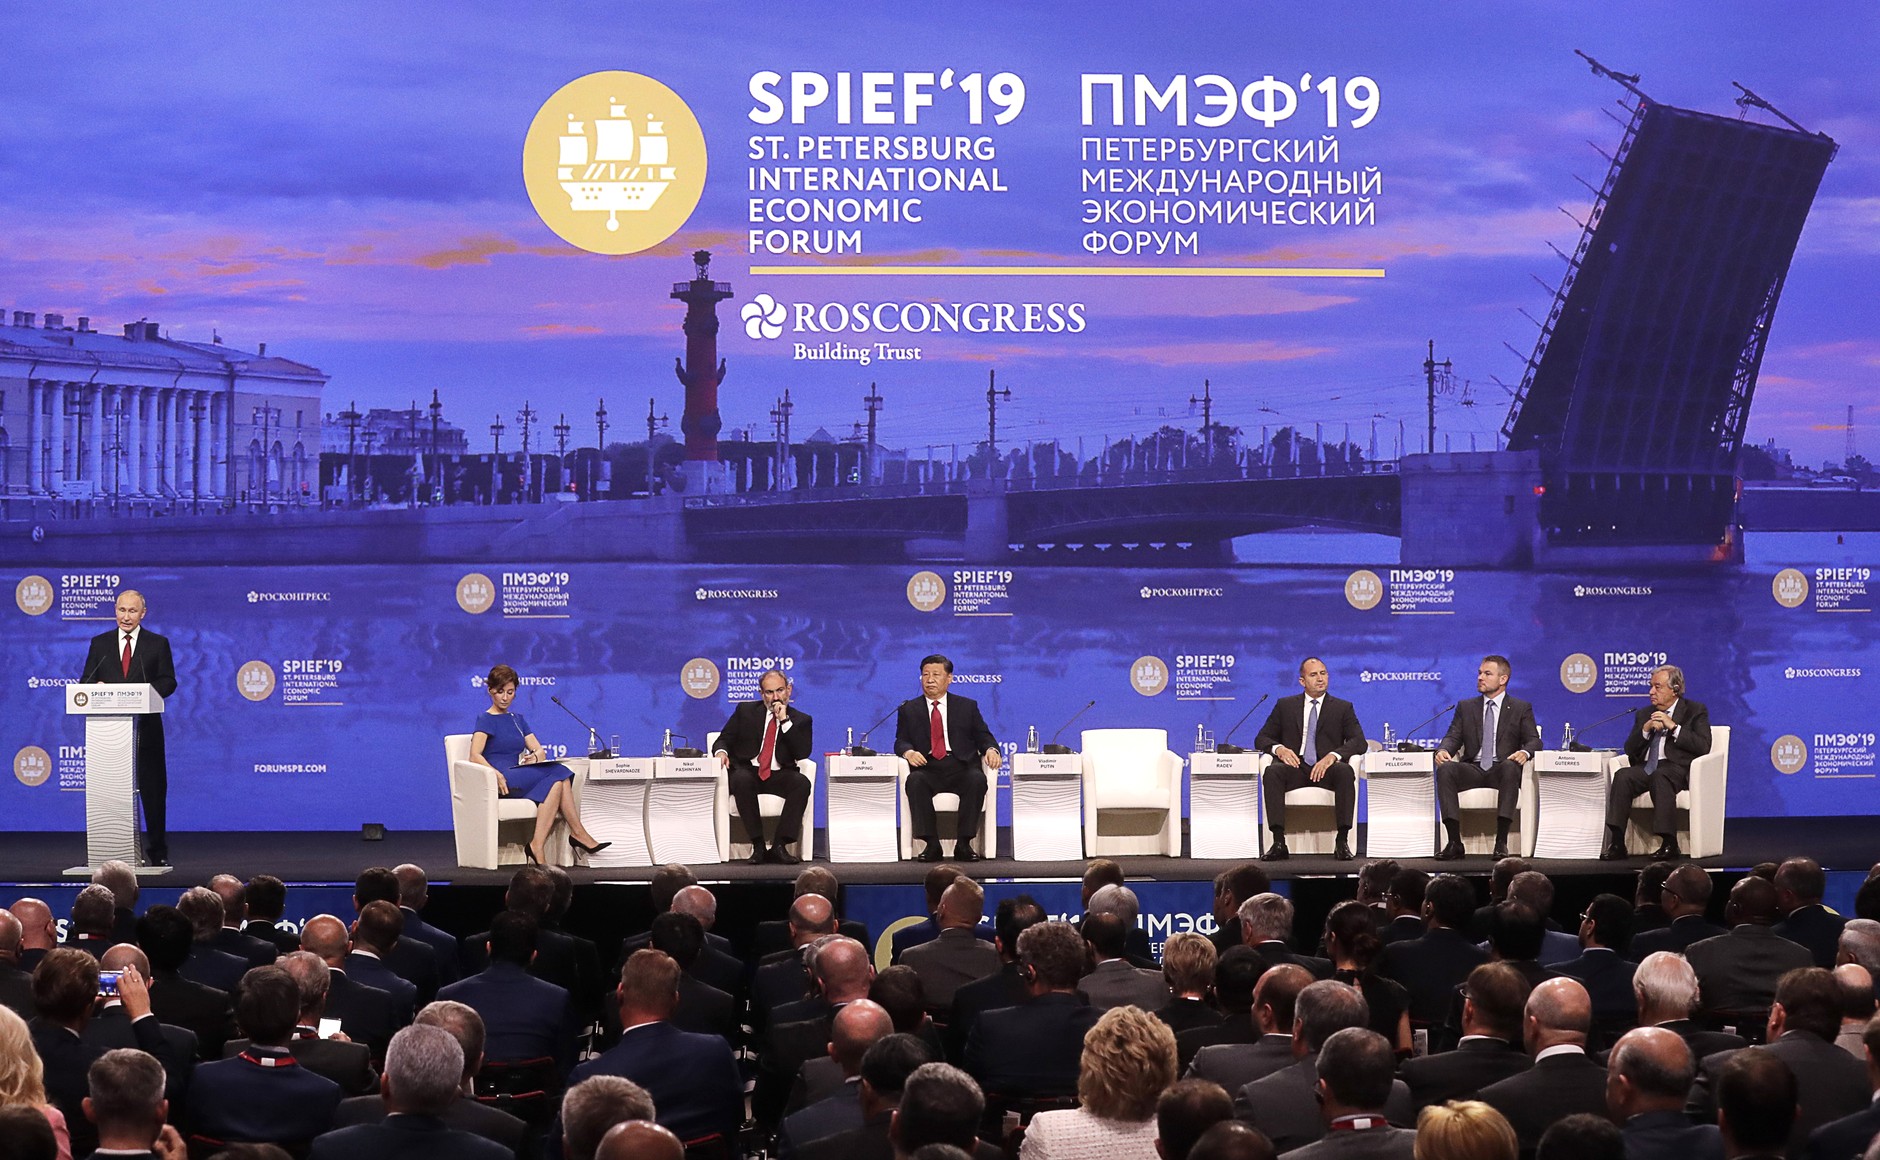 plenary-session-of-st-petersburg-international-economic-forum